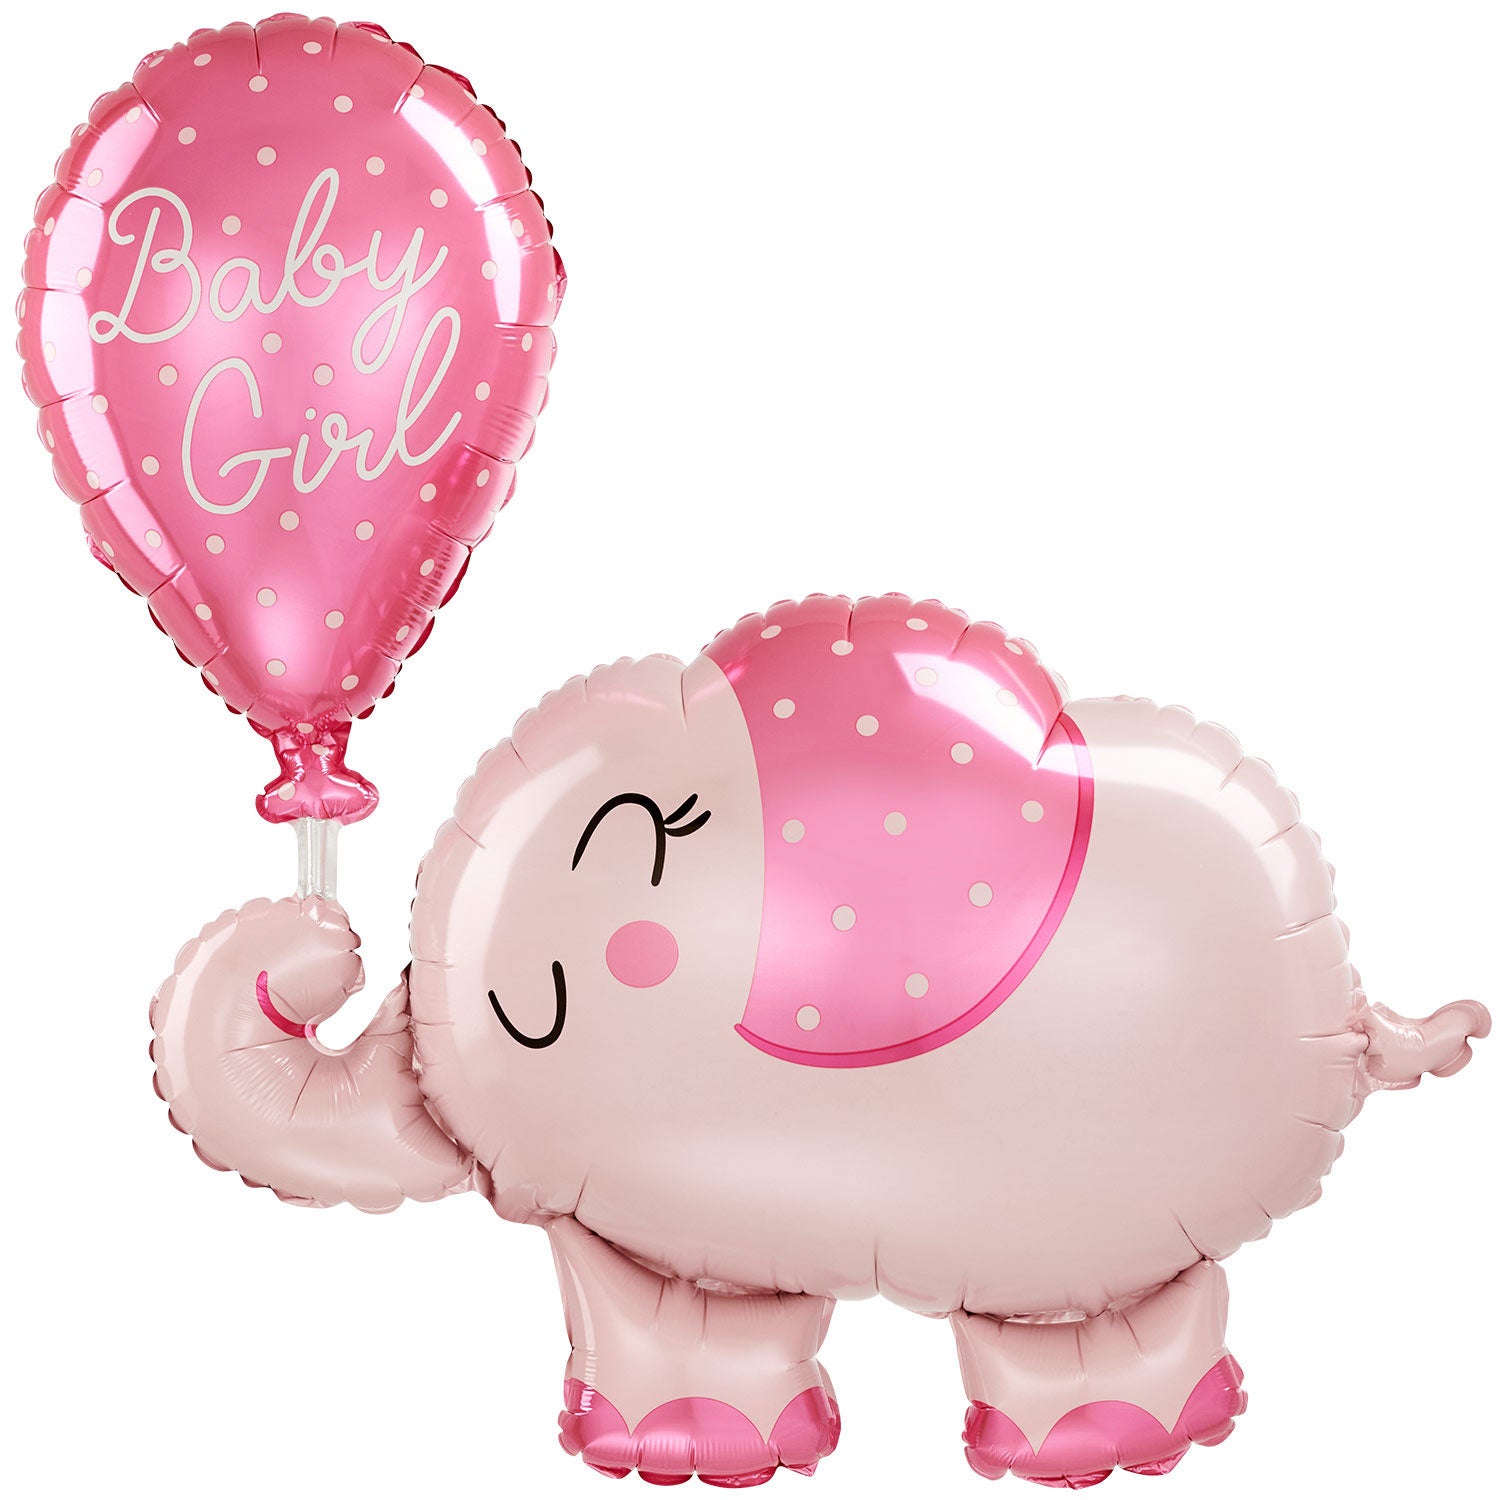 Baby Girl Elephant SuperShape Foil Balloon 73x78cm